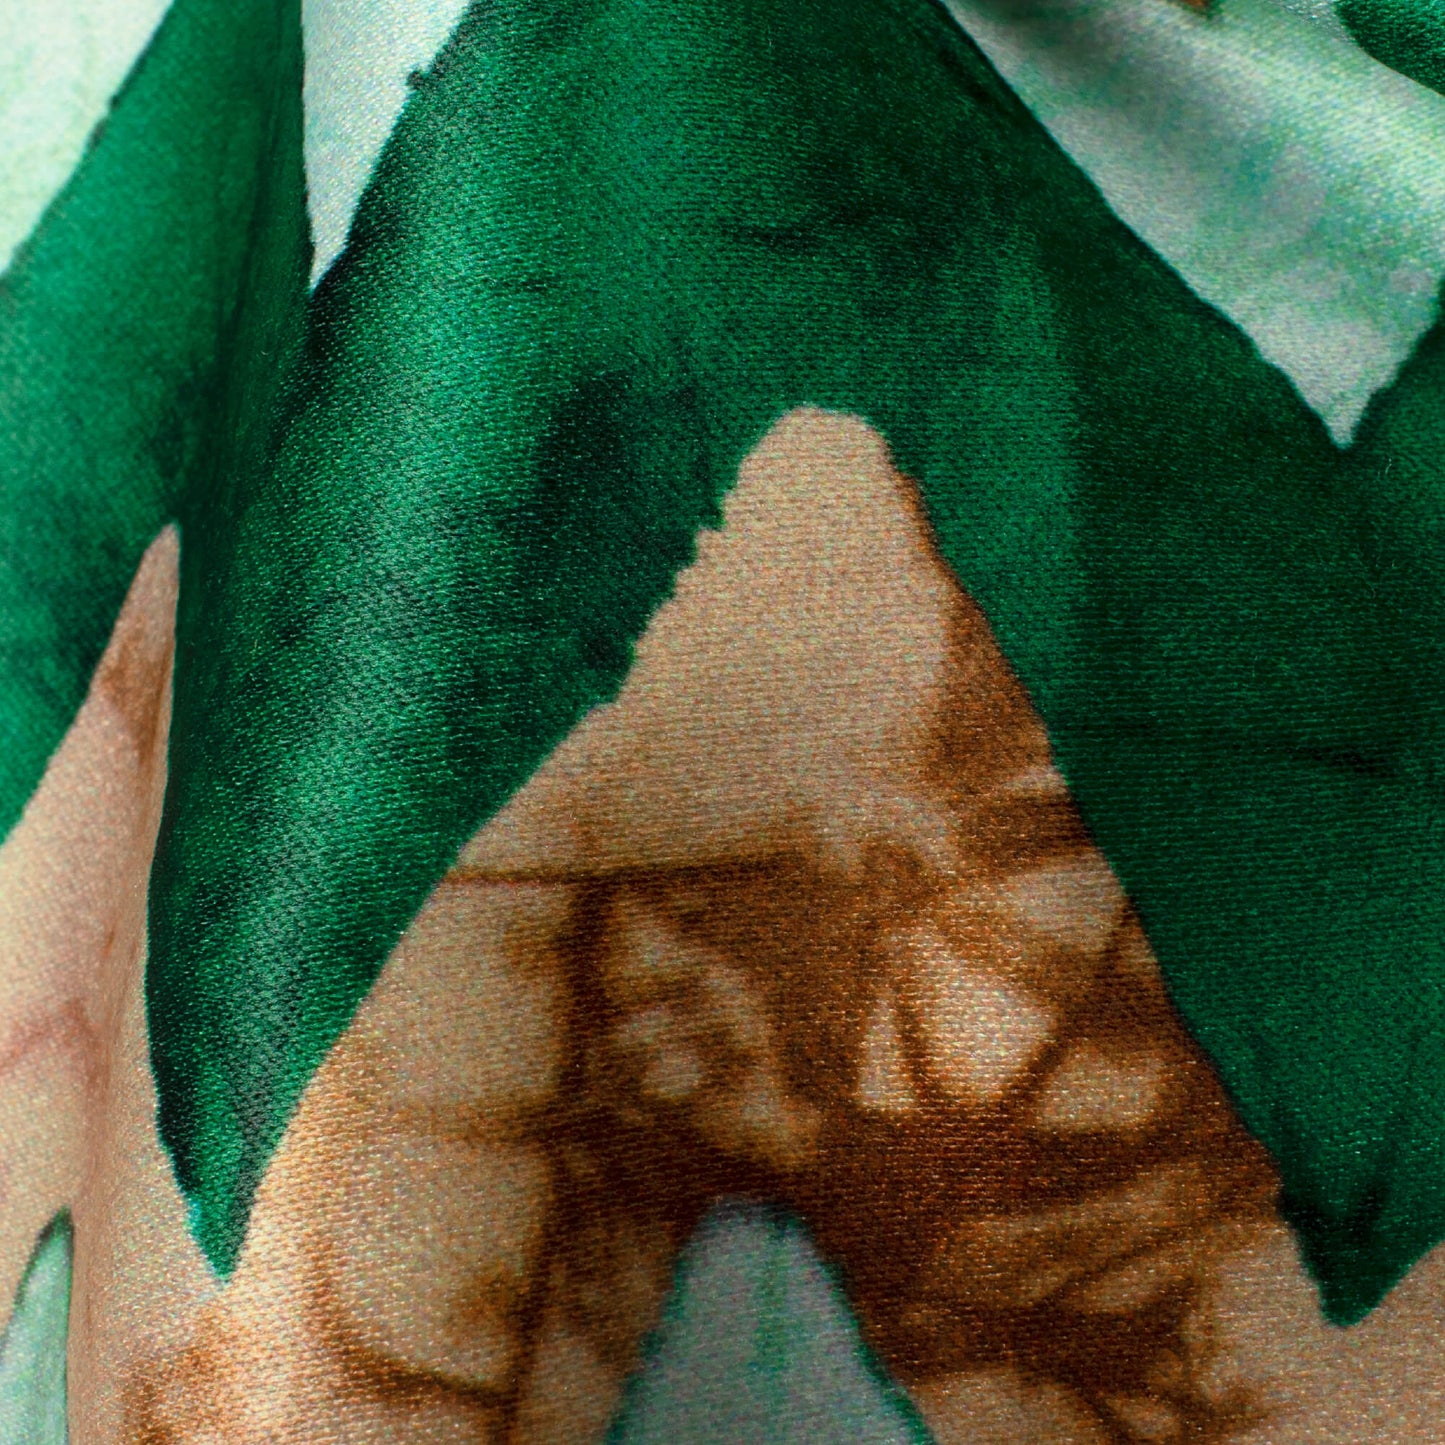 Forest Green And Melon Orange Chevron Pattern Digital Print Lush Satin Fabric